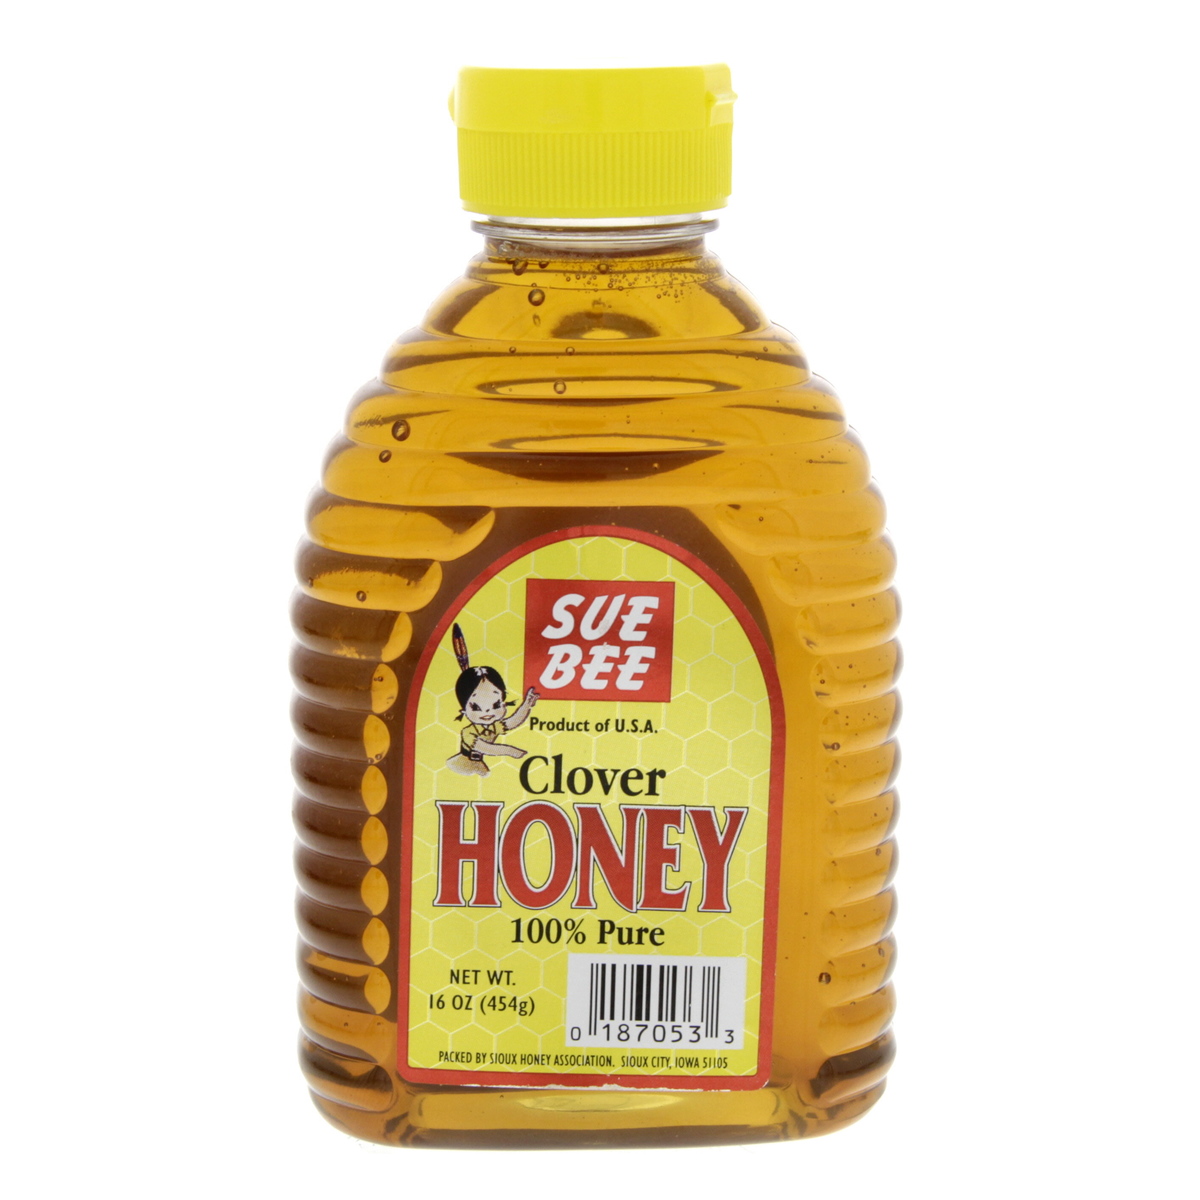 Sue Bee Clover Honey 454g